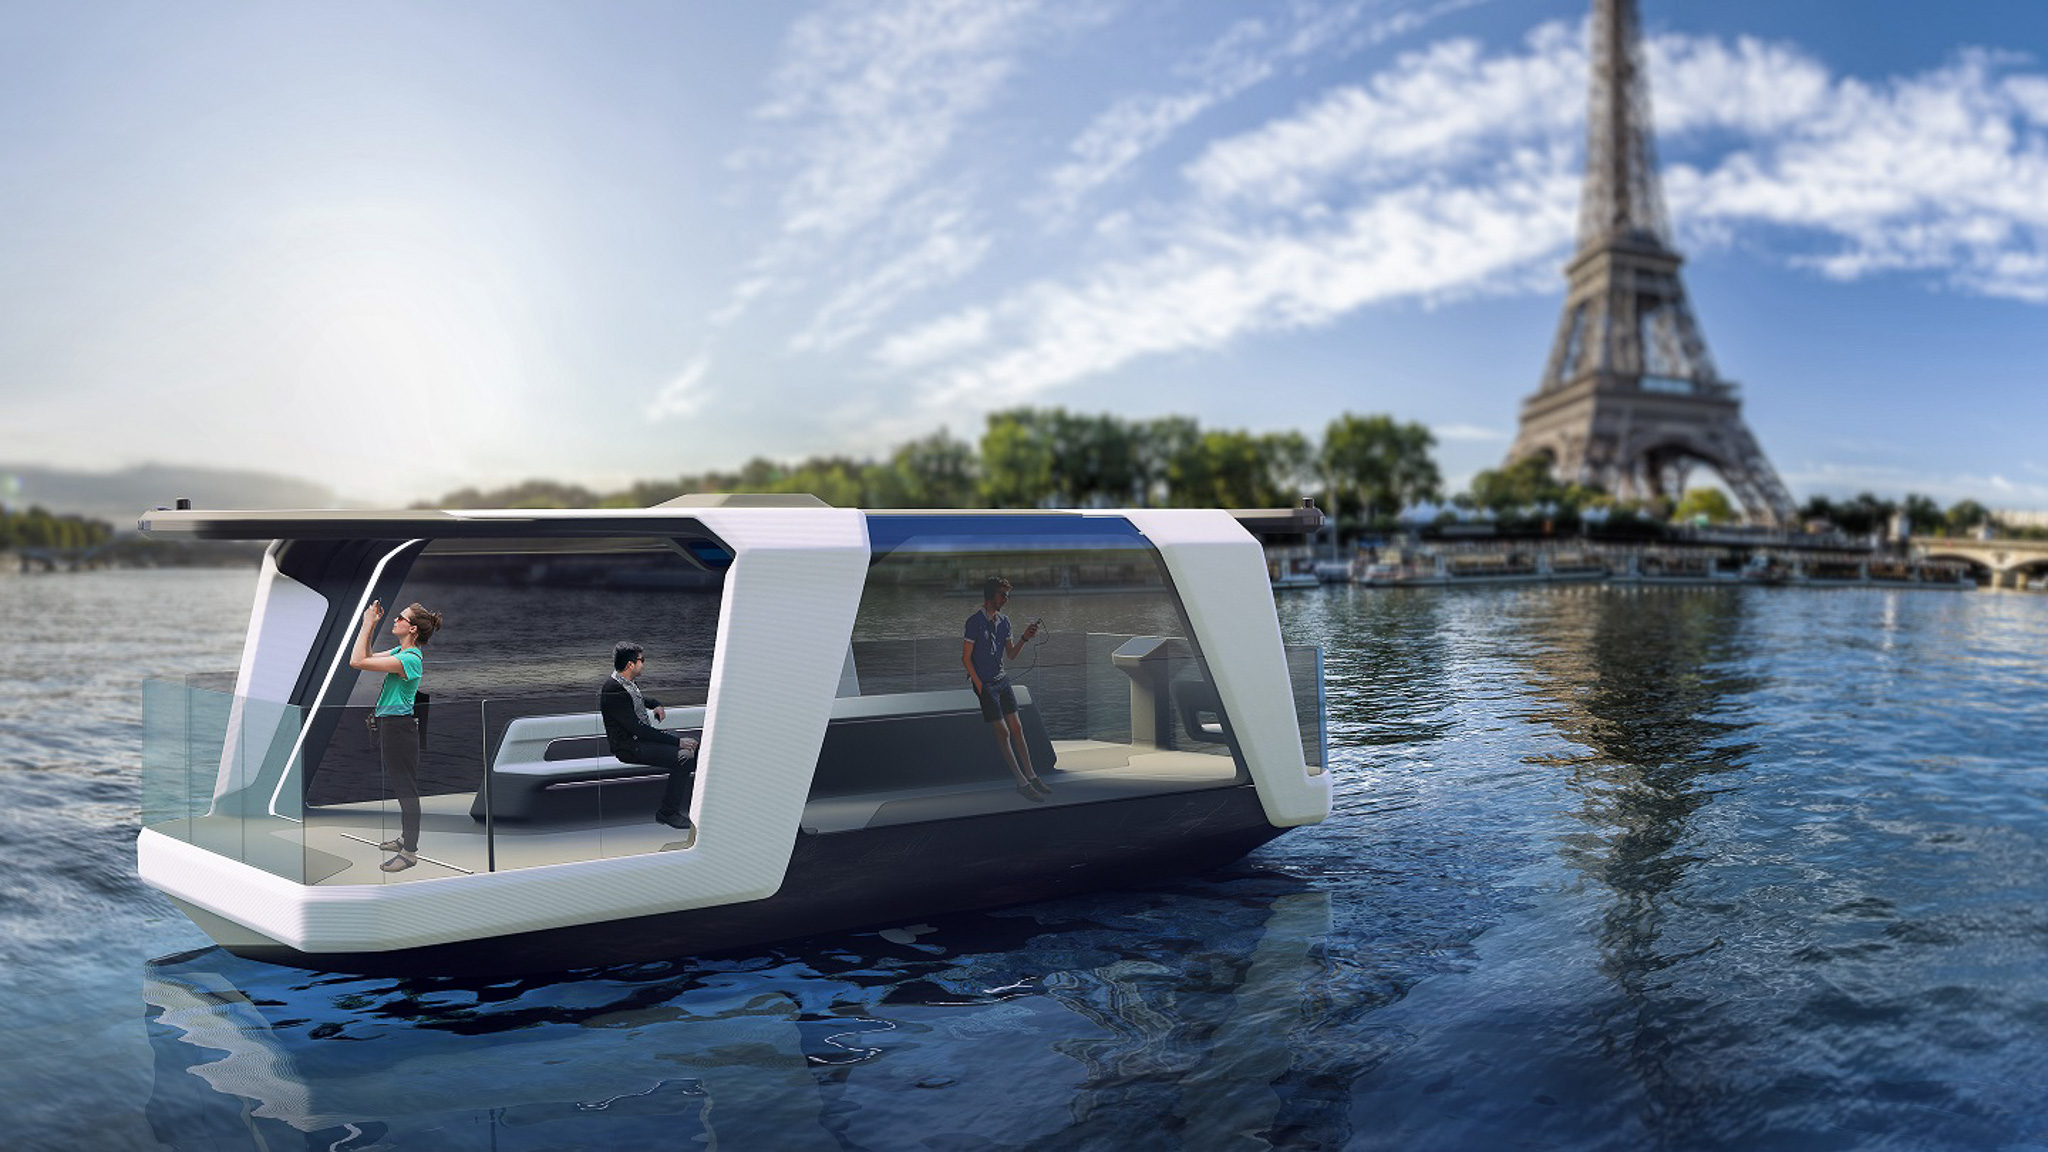 electrical-and-autonomous-ferry-paris-olympic-games-royal-van-der-leun-electrical-installation-autonome-ferry-vdl-seine-eiffeltower